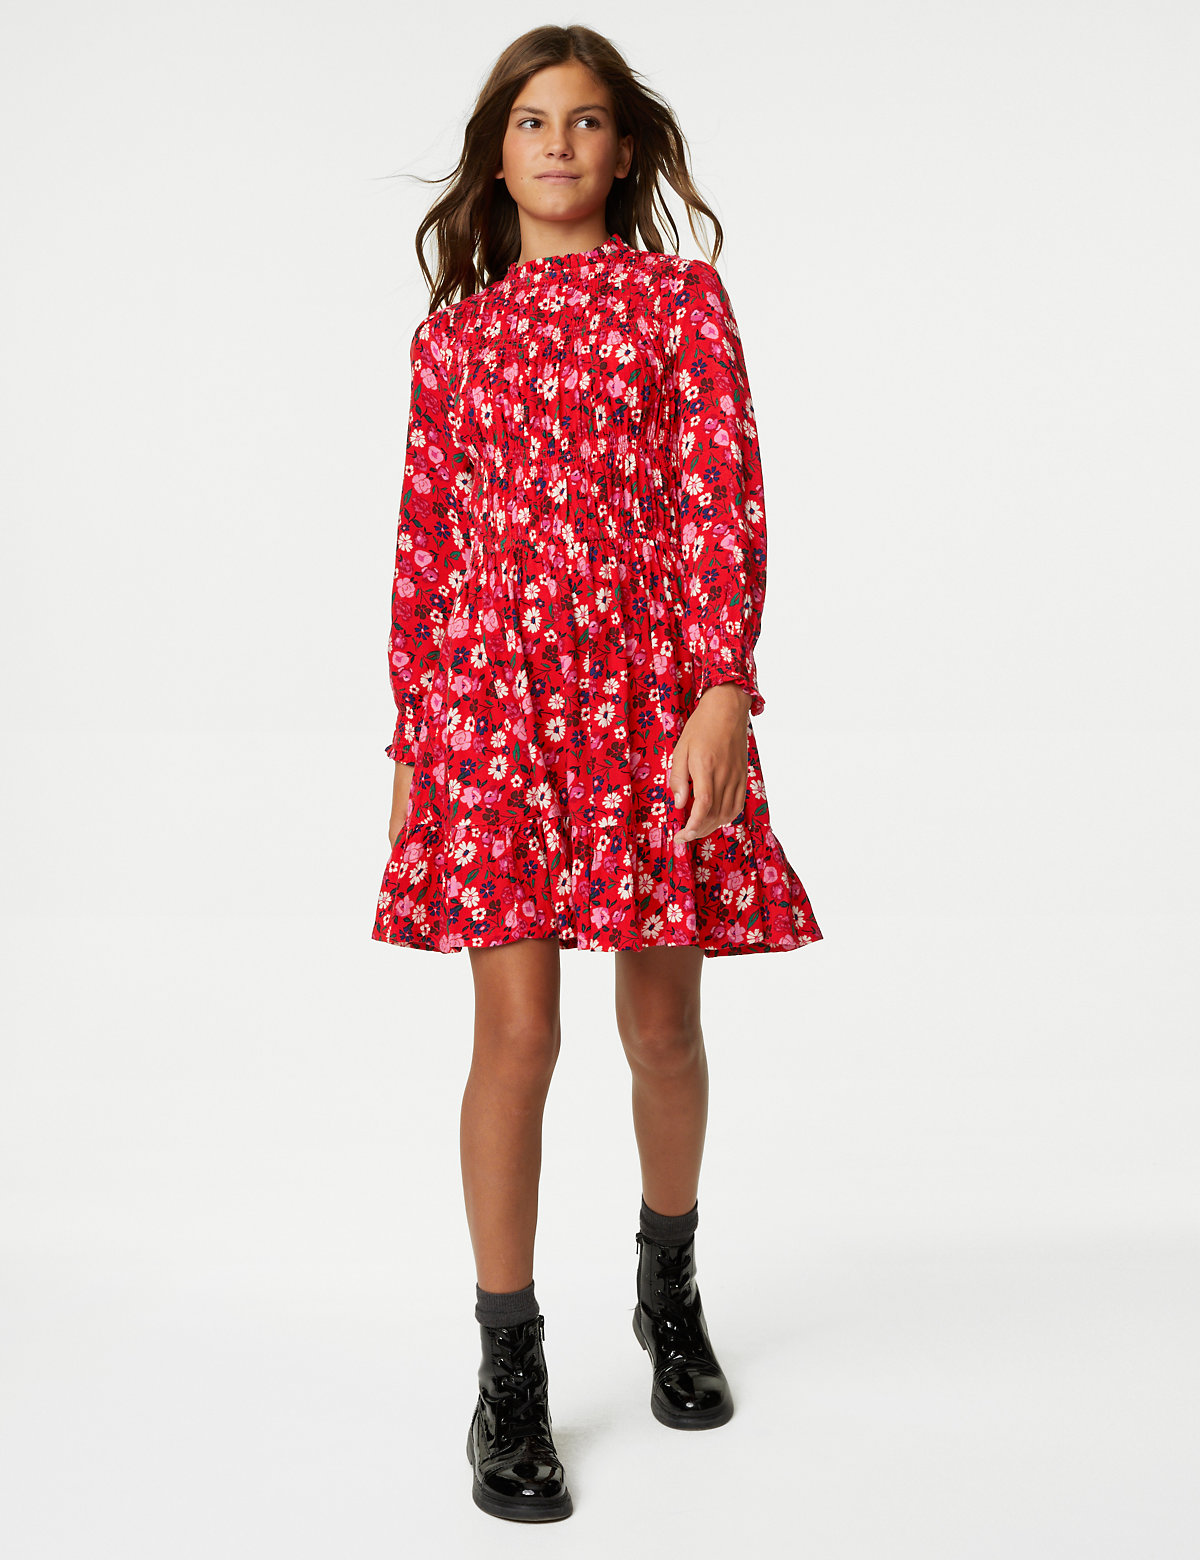 Printed Shirred Dress (6-16 Yrs)